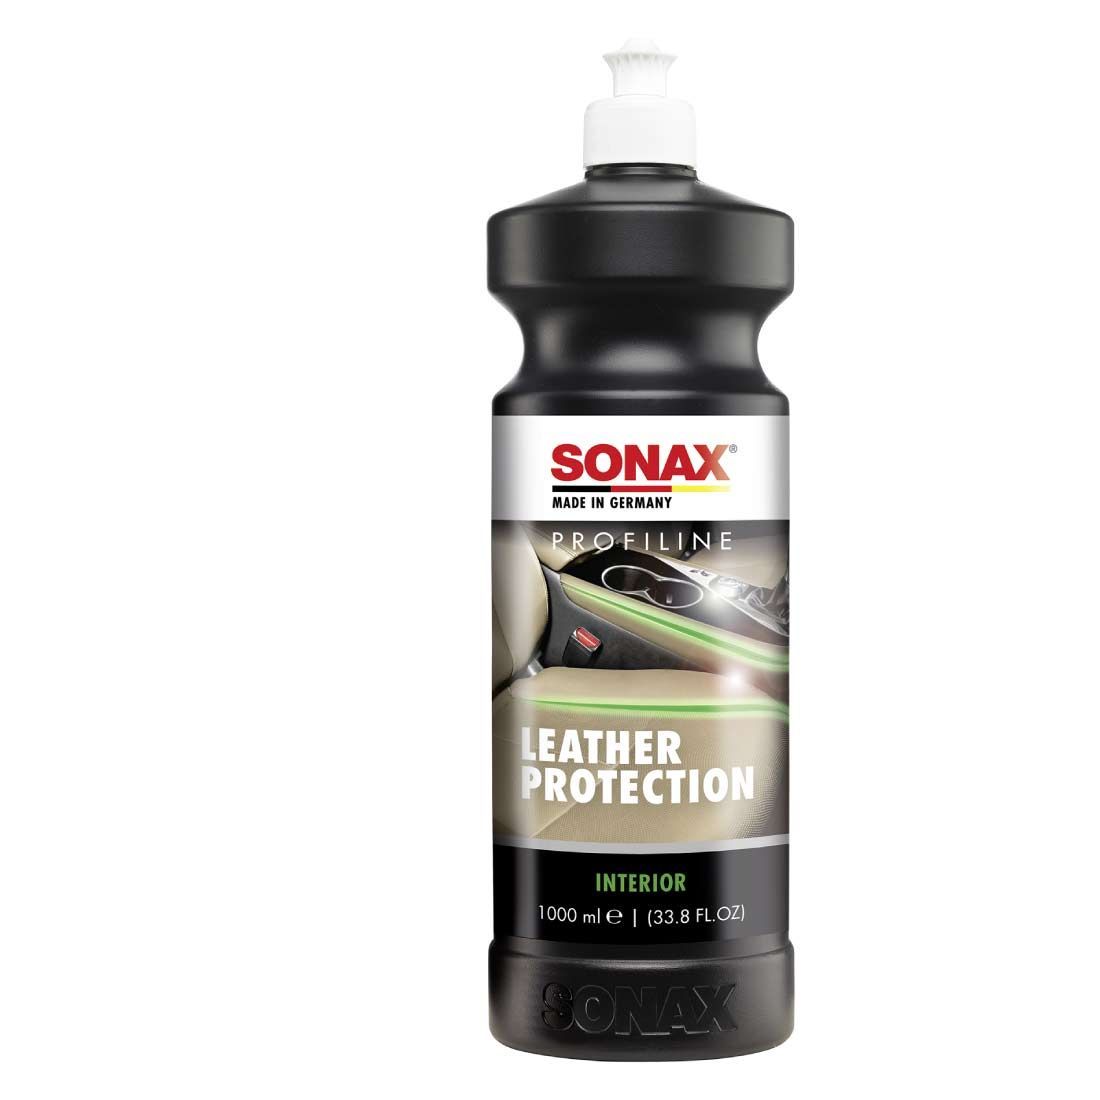 Sonax Profiline Leather Care